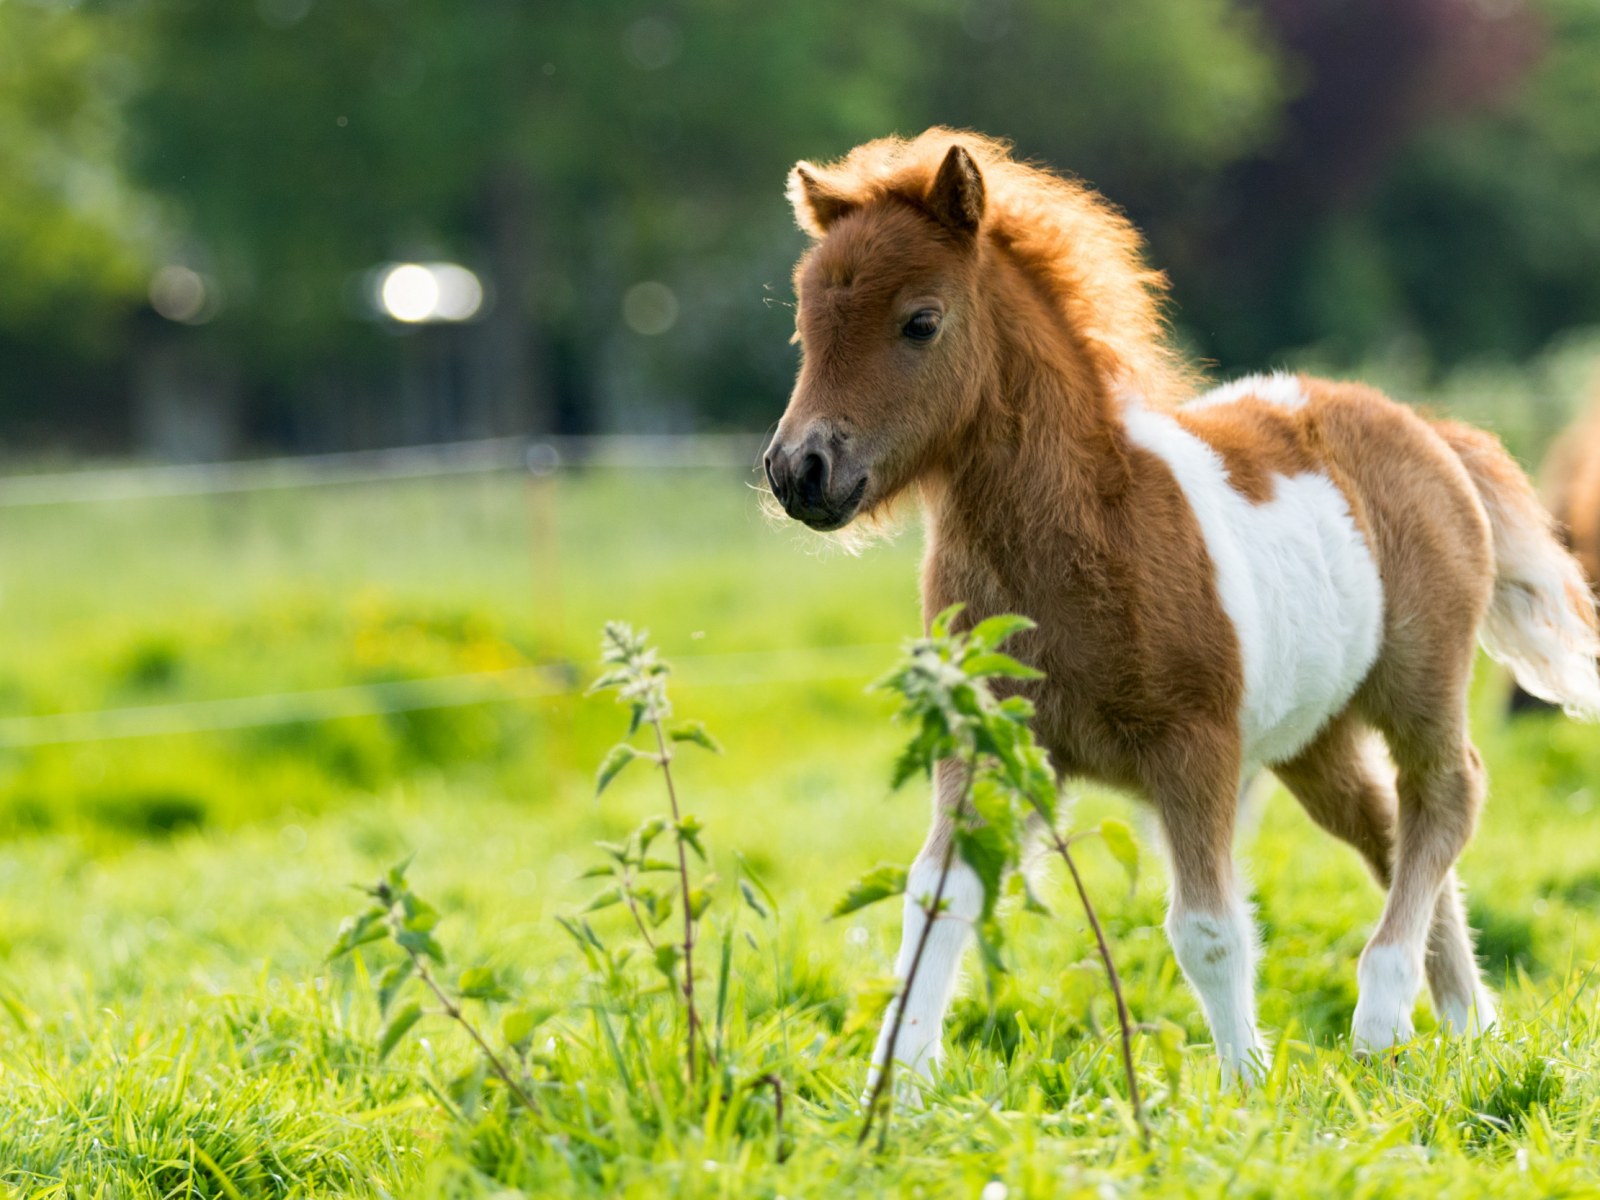 Ponies are NOT baby horses. -u/phrygN